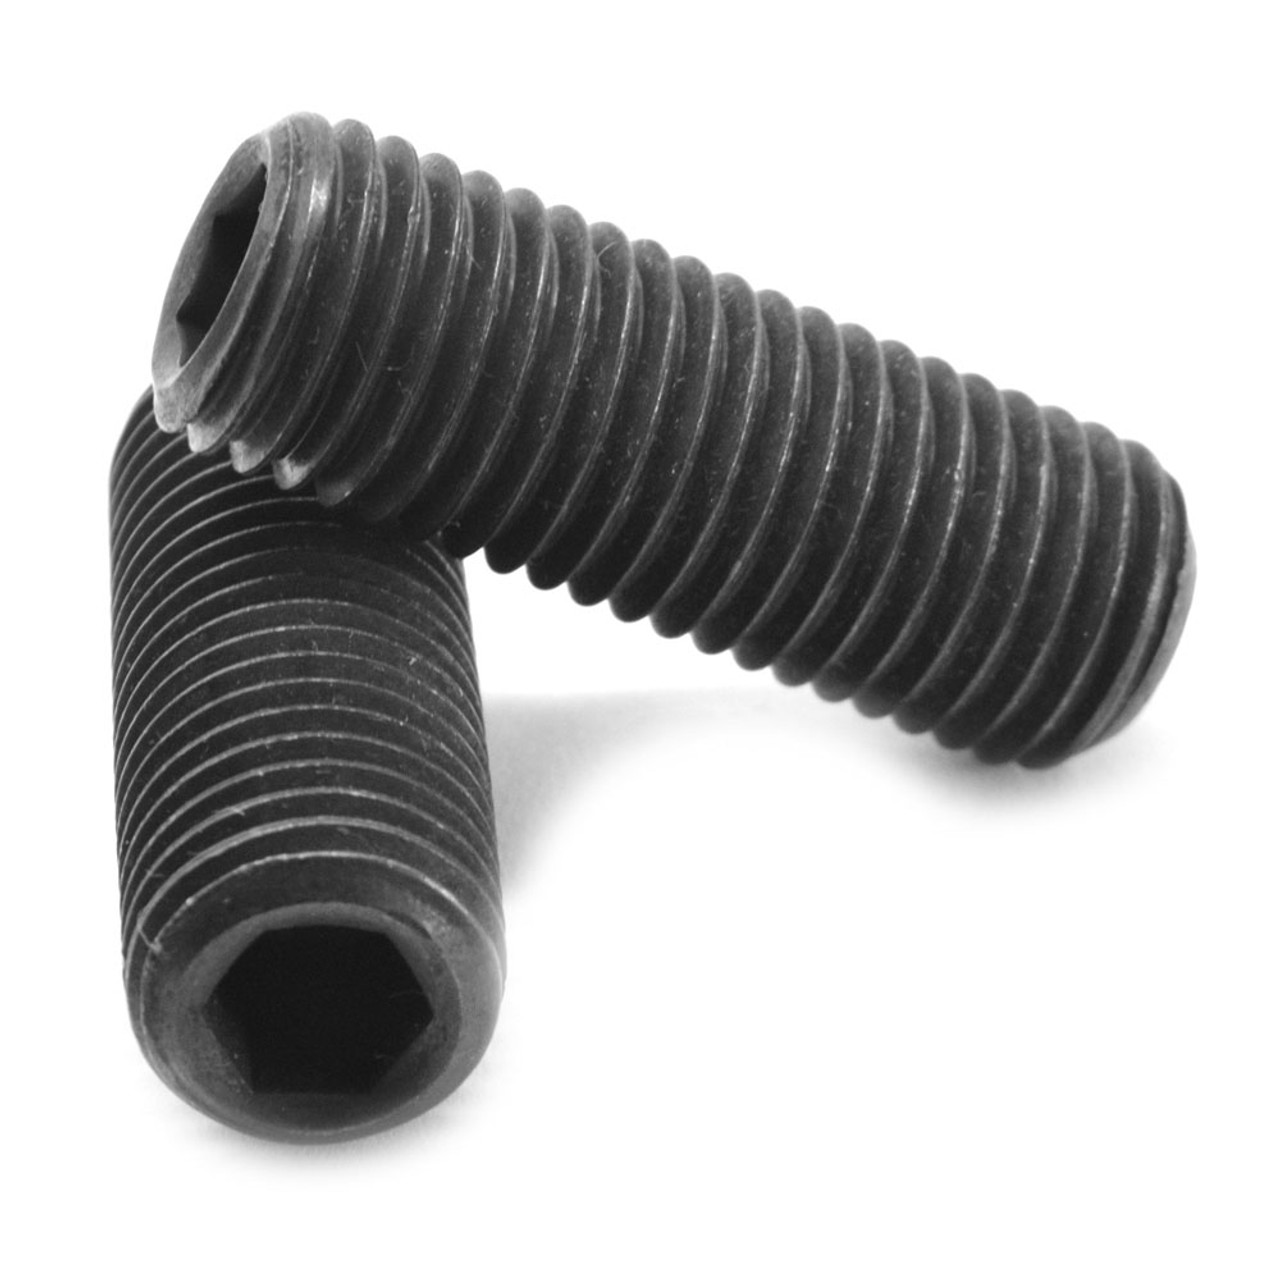 M6 x 1.00 x 25 MM Coarse Thread ISO 4029 / DIN 916 Class 45H Socket Set Screw Cup Point Alloy Steel Black Oxide